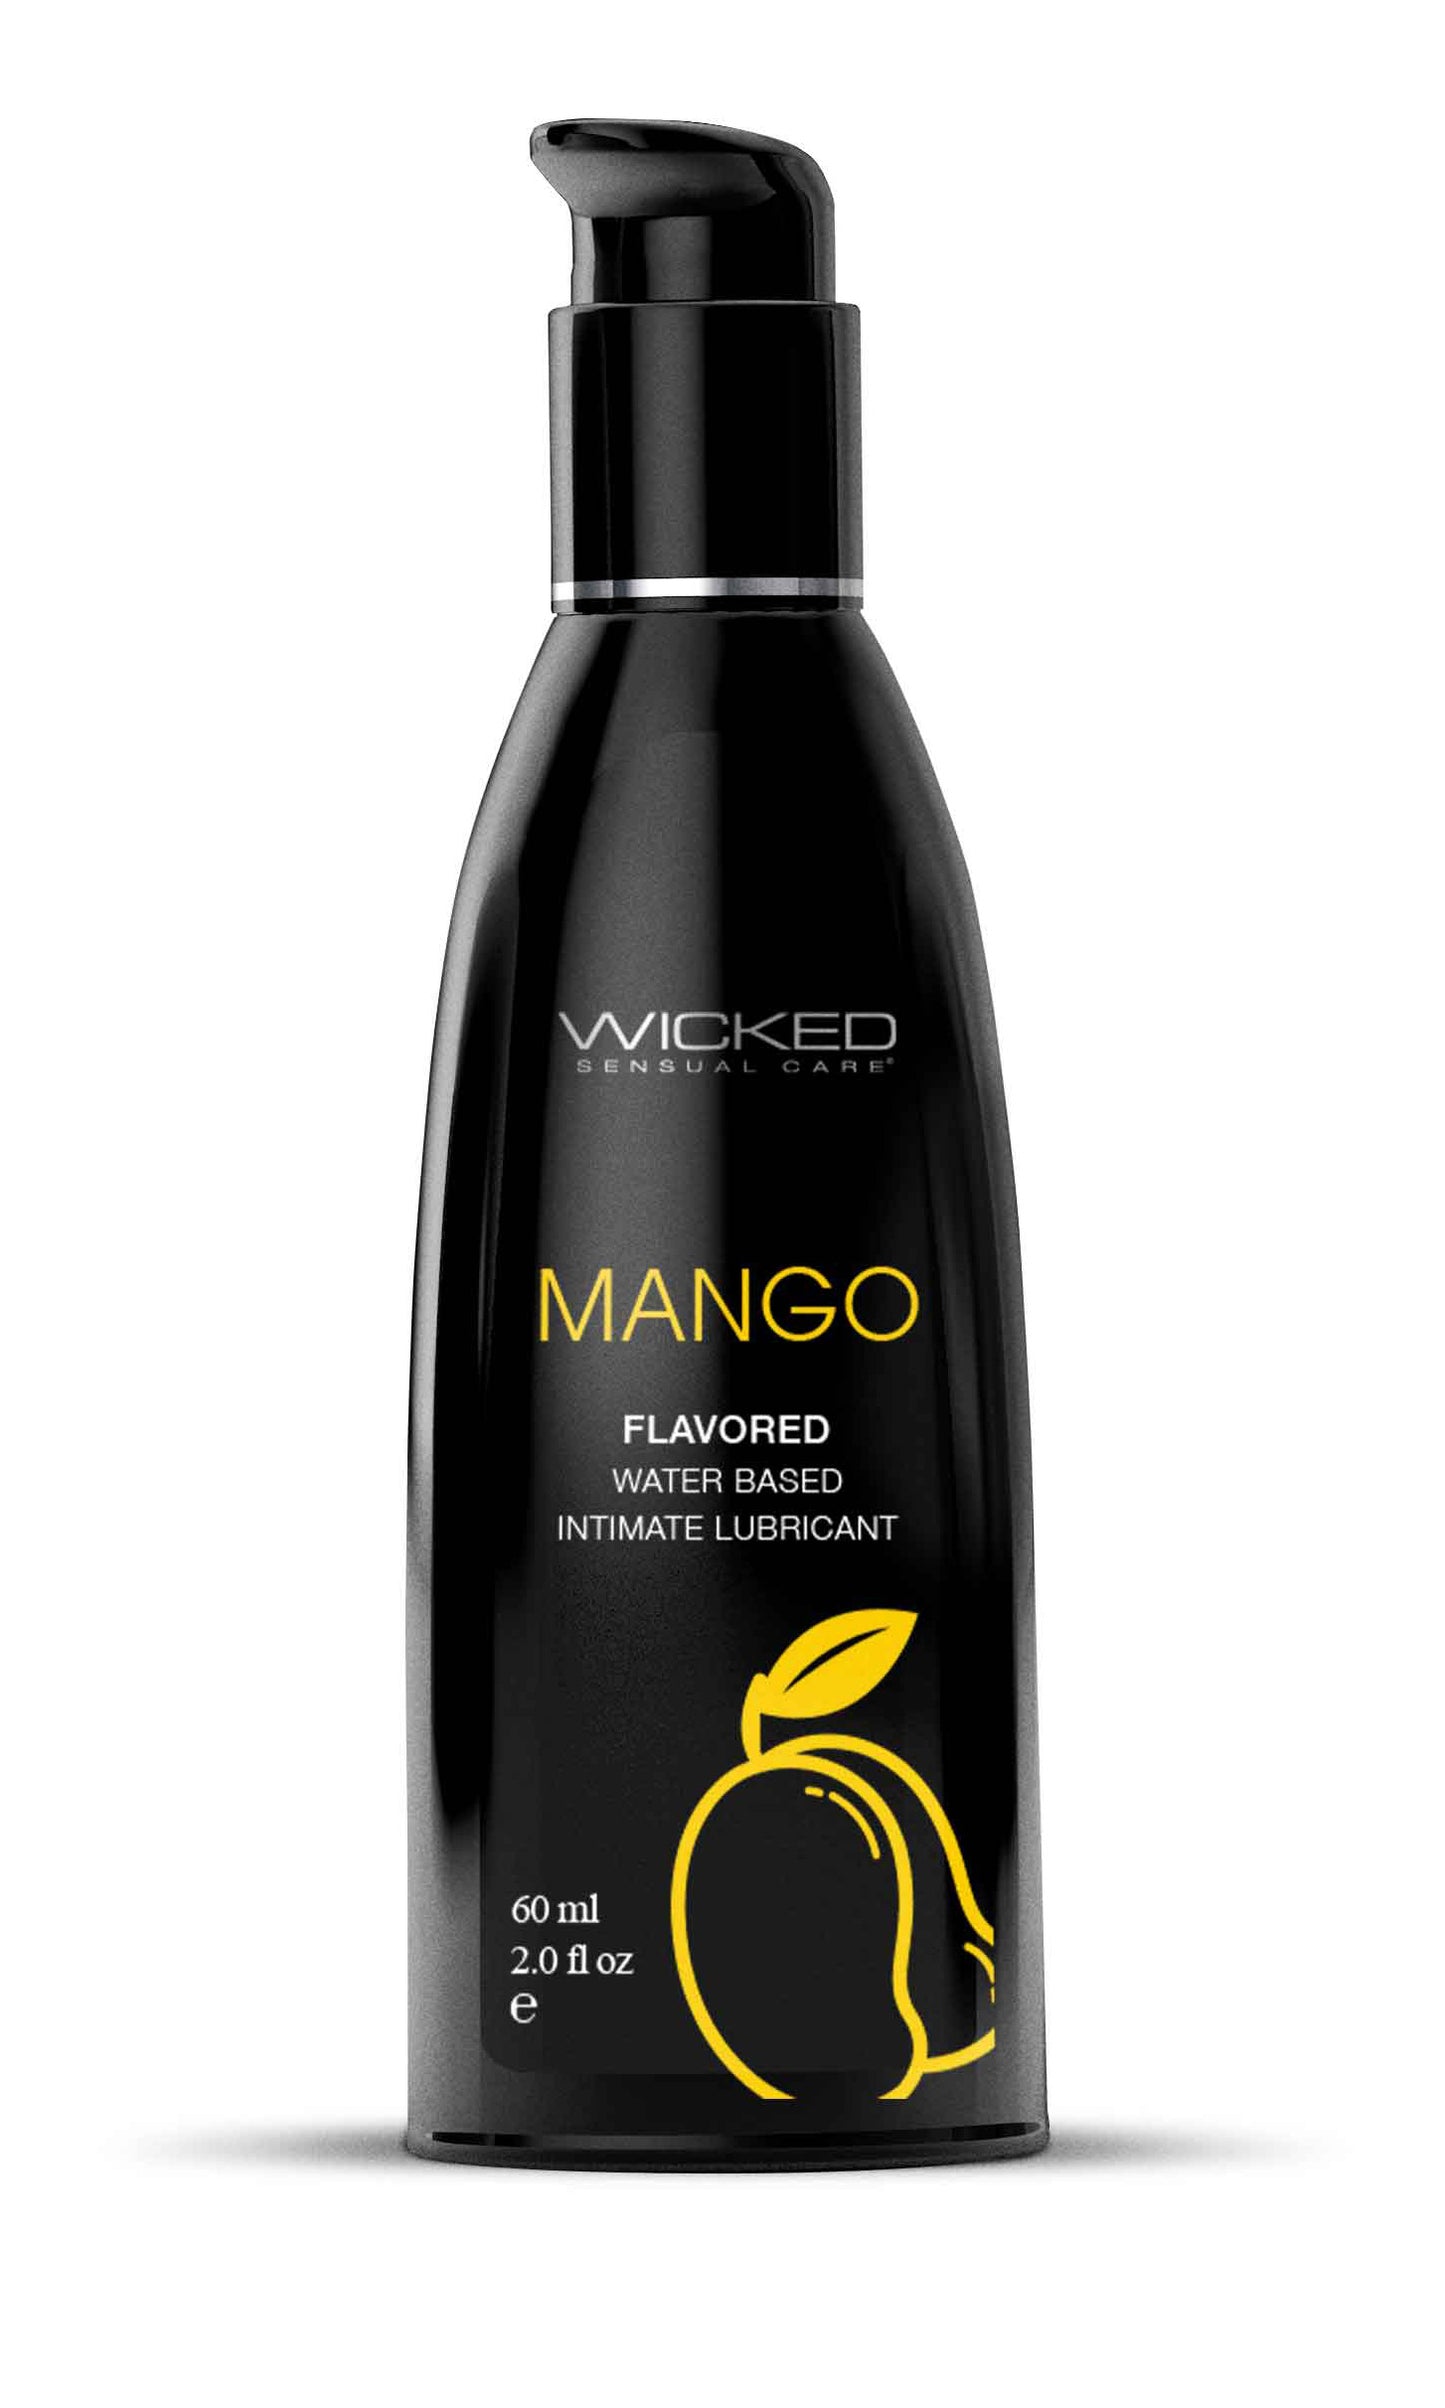 Aqua Mango Water Flavored Water- Based Lubricant